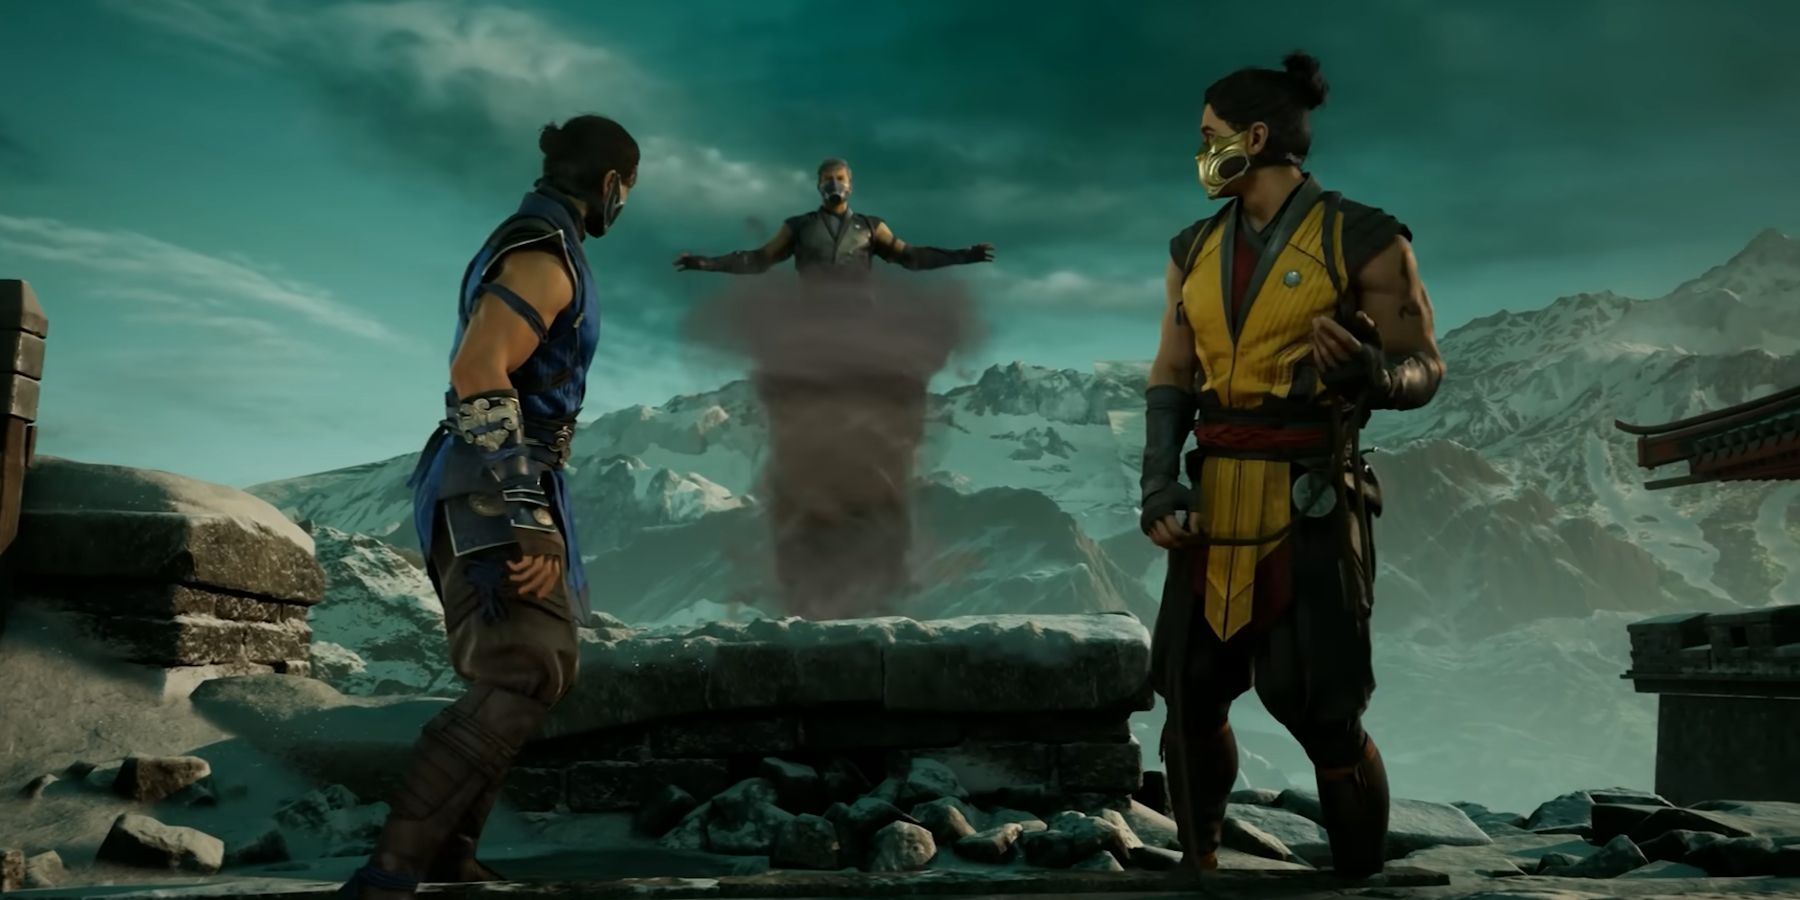 Mortal Kombat 1 Gameplay Deutsch Story Mode #01 - Smoke Angriff der Lin  Kuei 